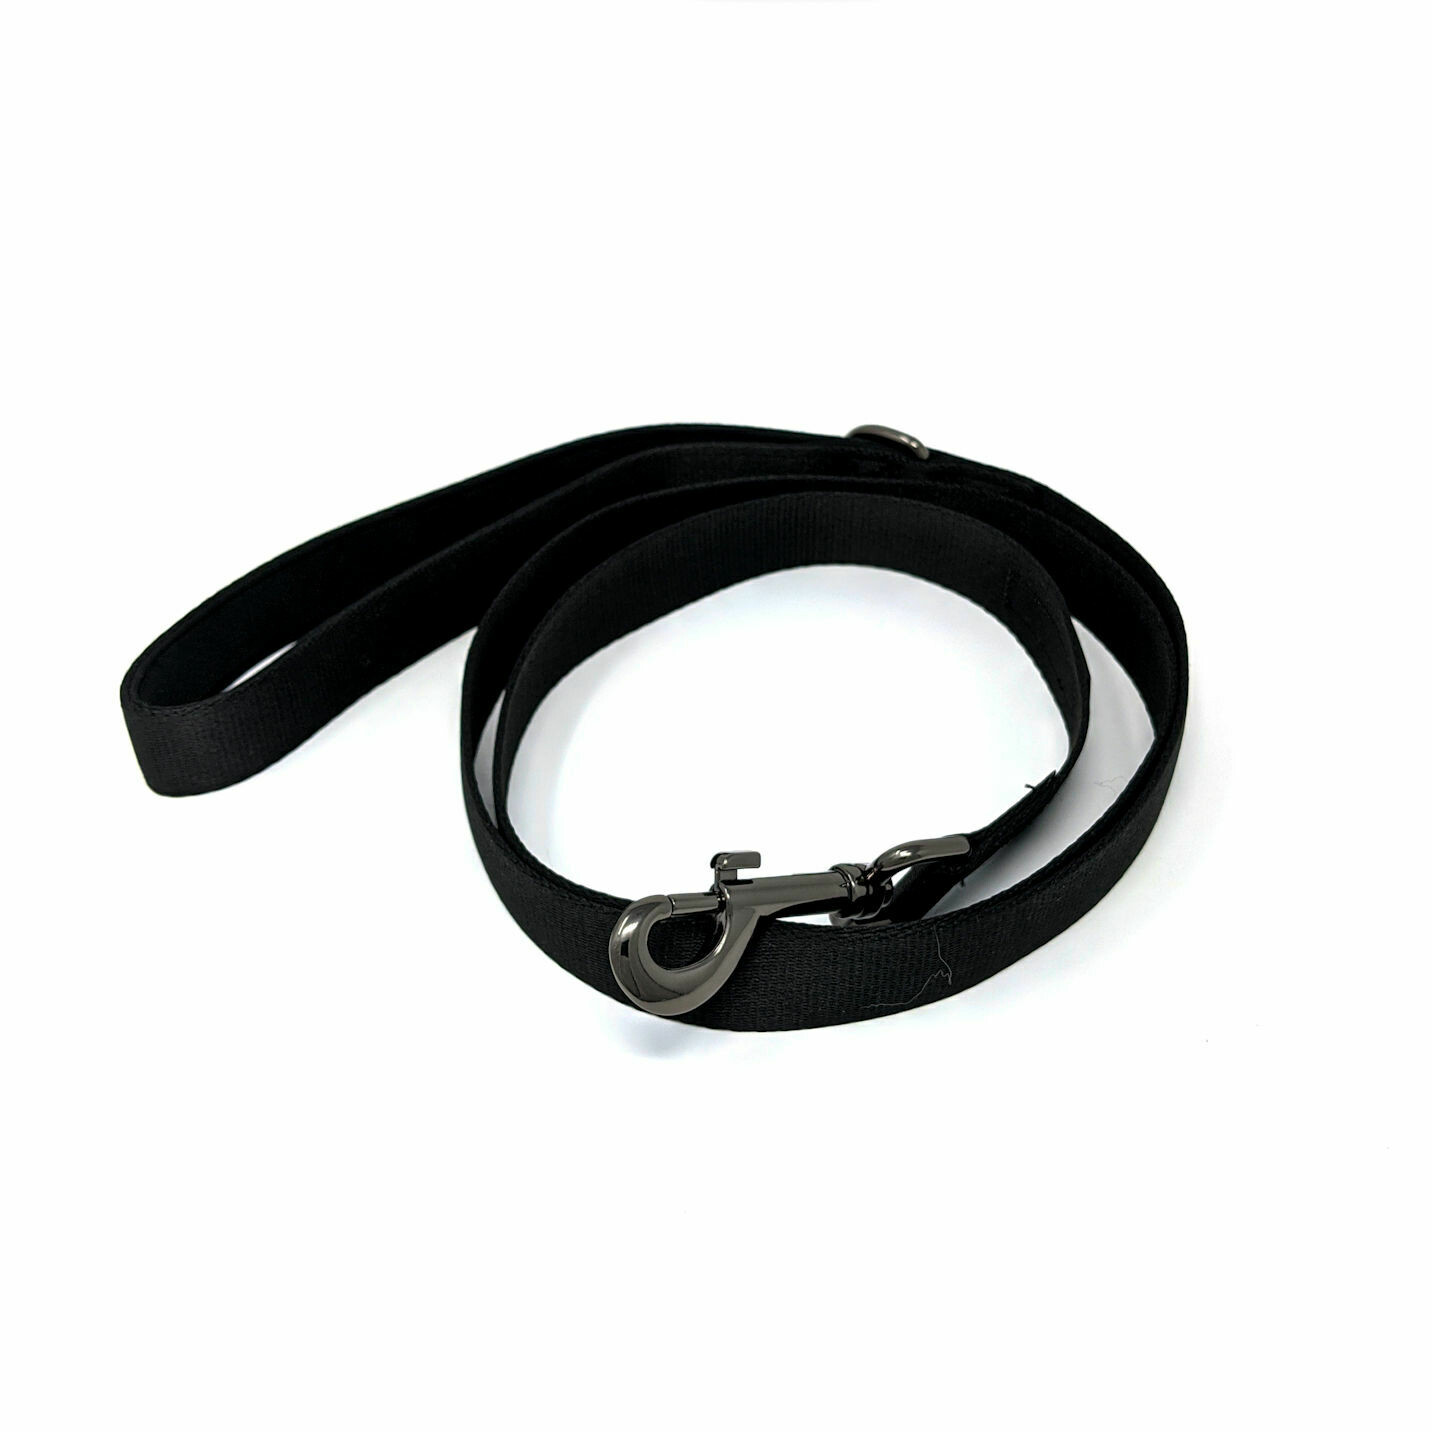 Black and gunmetal leash